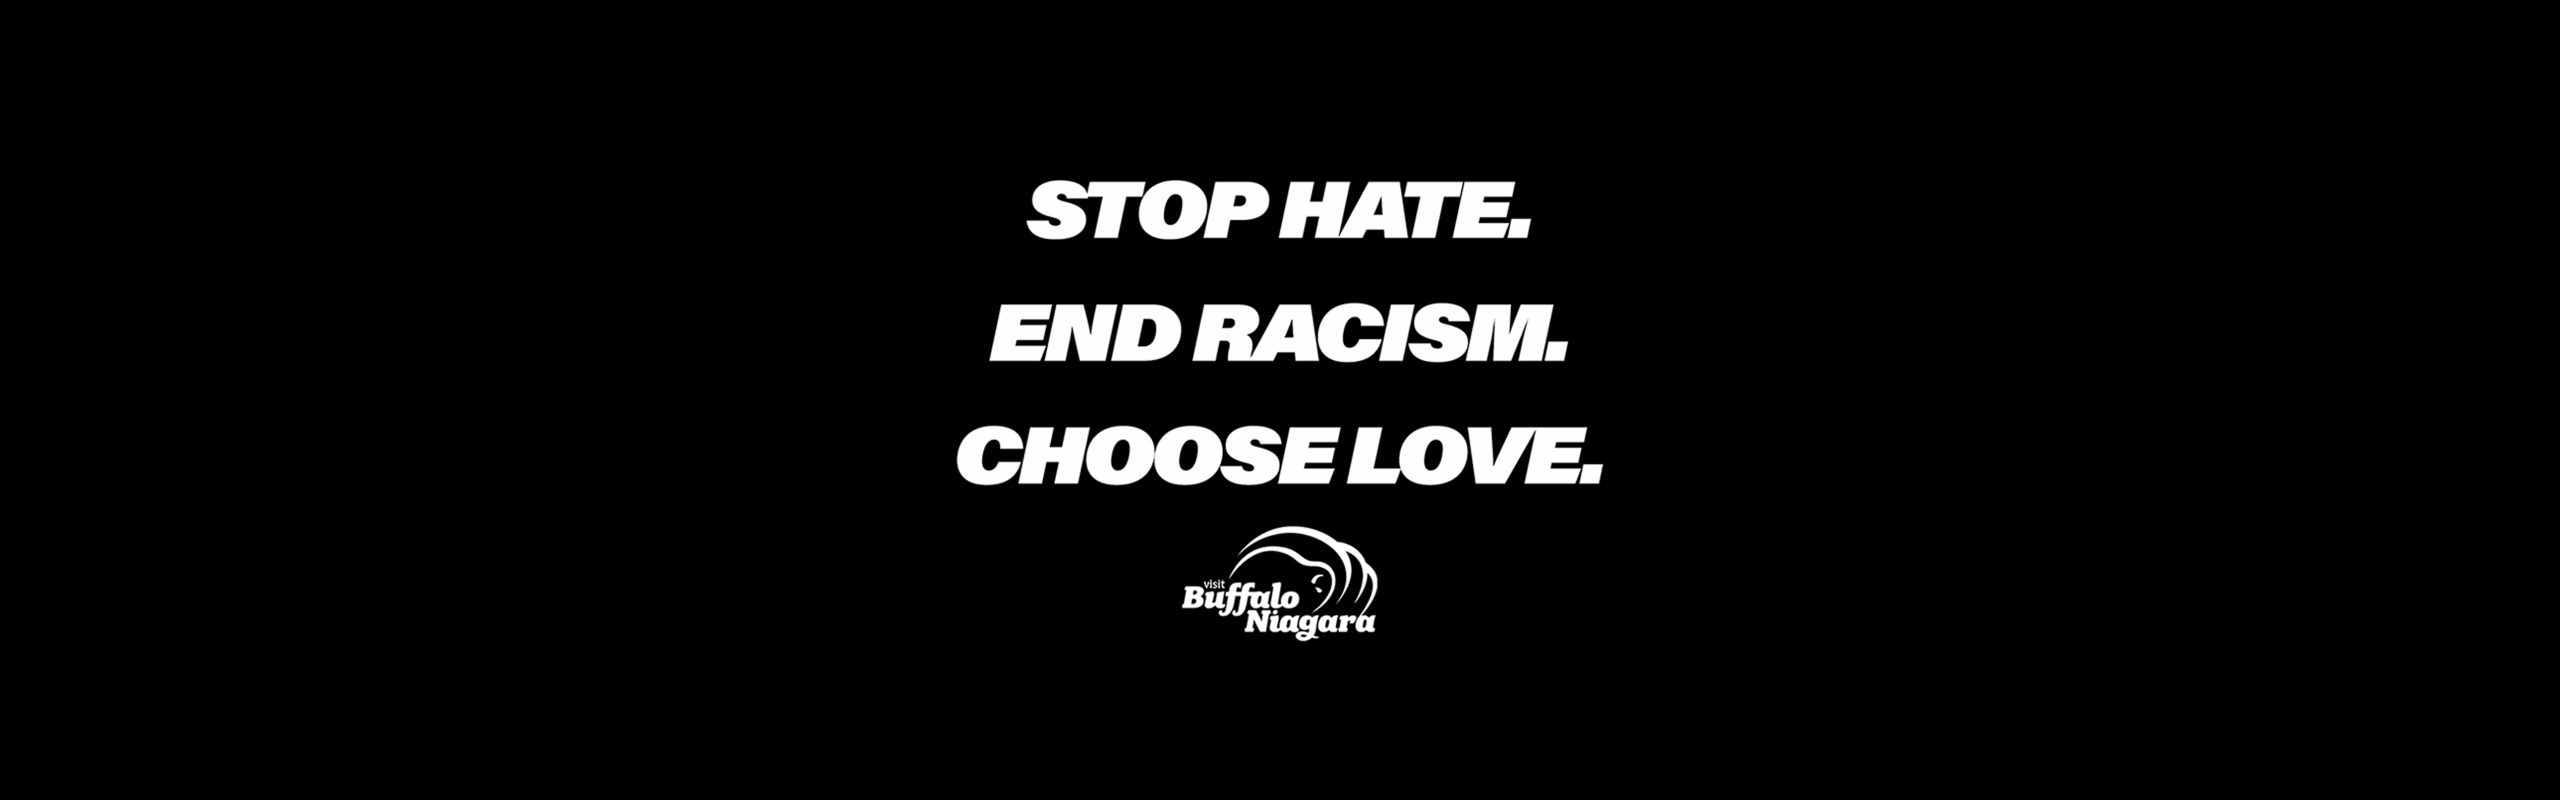 stop hate-vbn-wide